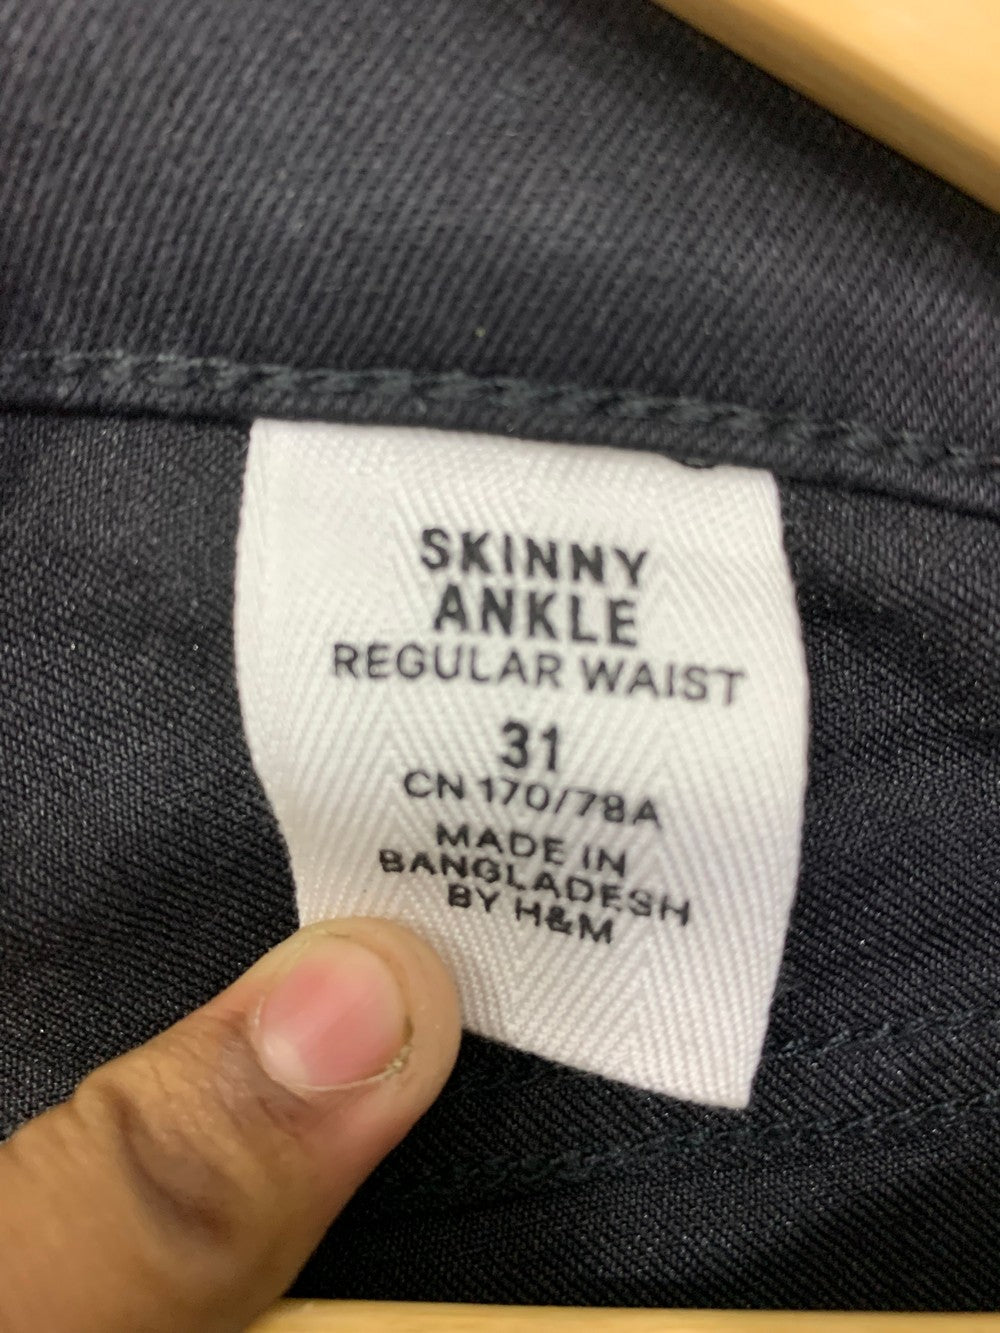 Skinny Ankle Branded Original Jeans For Women Pant